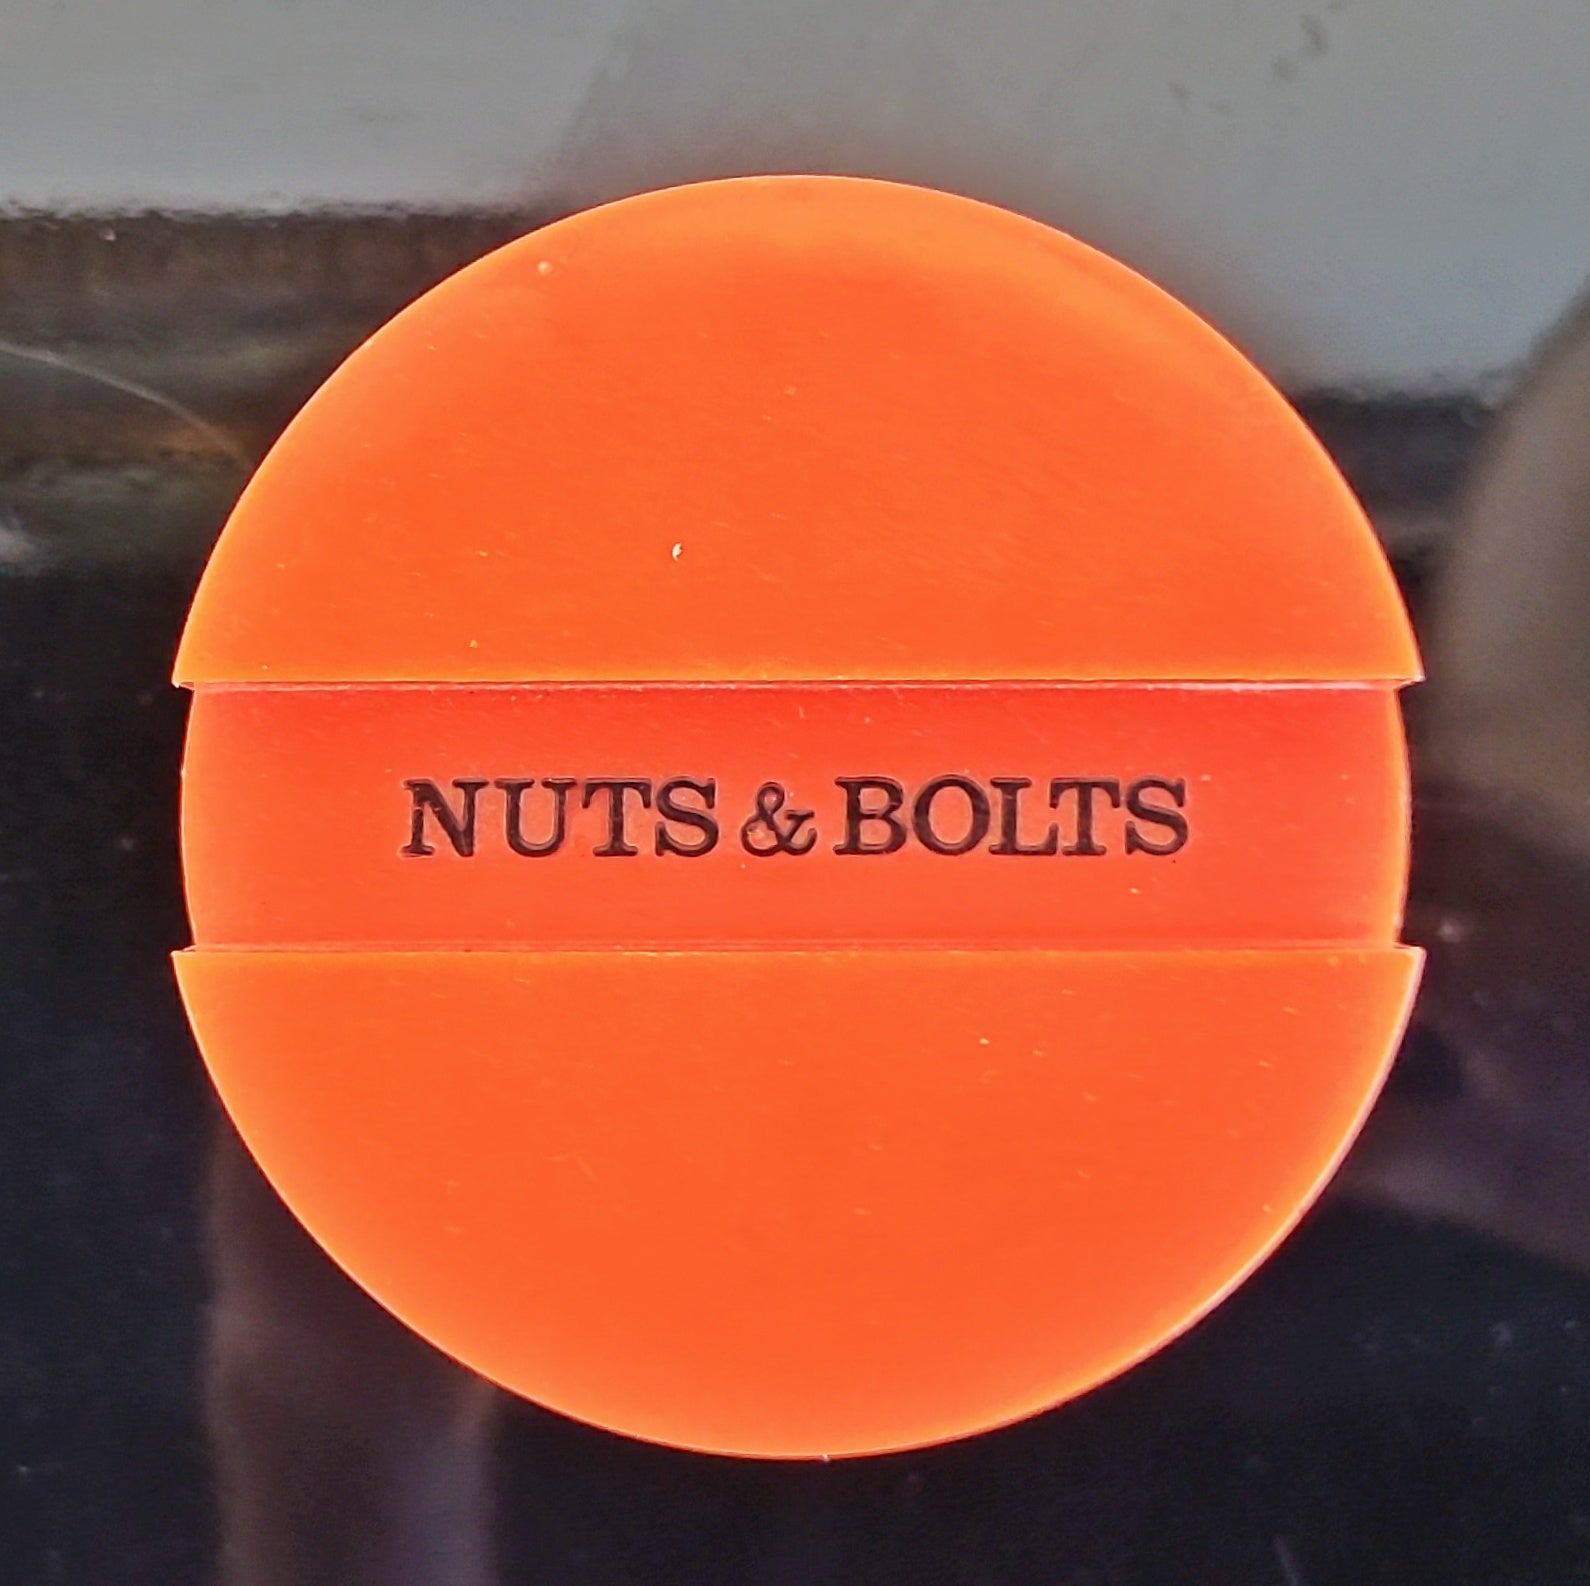 MASSIMO VIGNELLI 'NUTS & BOLTS' AFTERSHAVE BOTTLE FOR COLTON (1968)